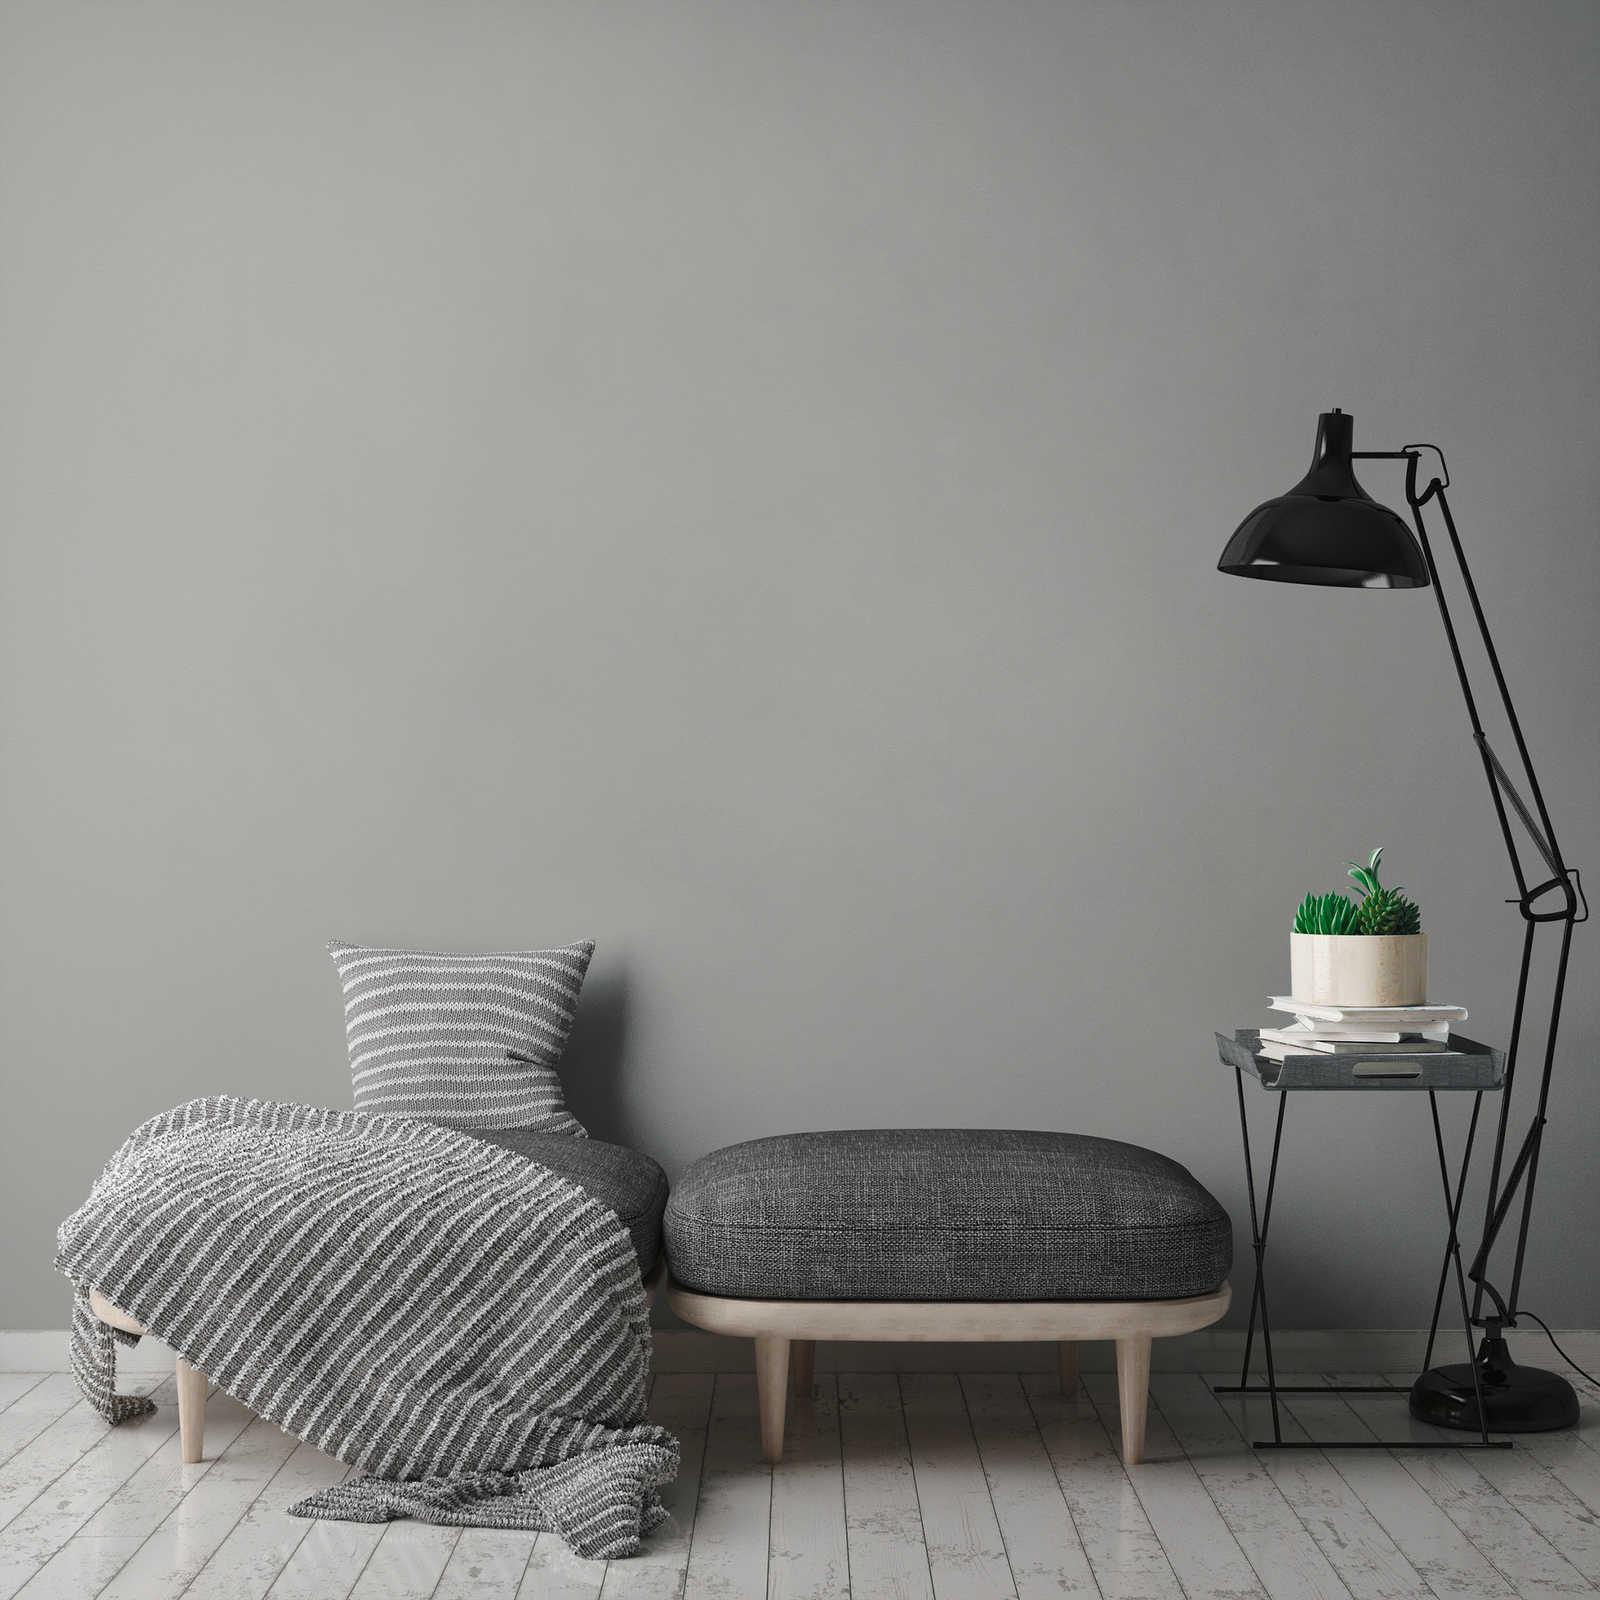             Plain wallpaper grey with matte surface texture
        